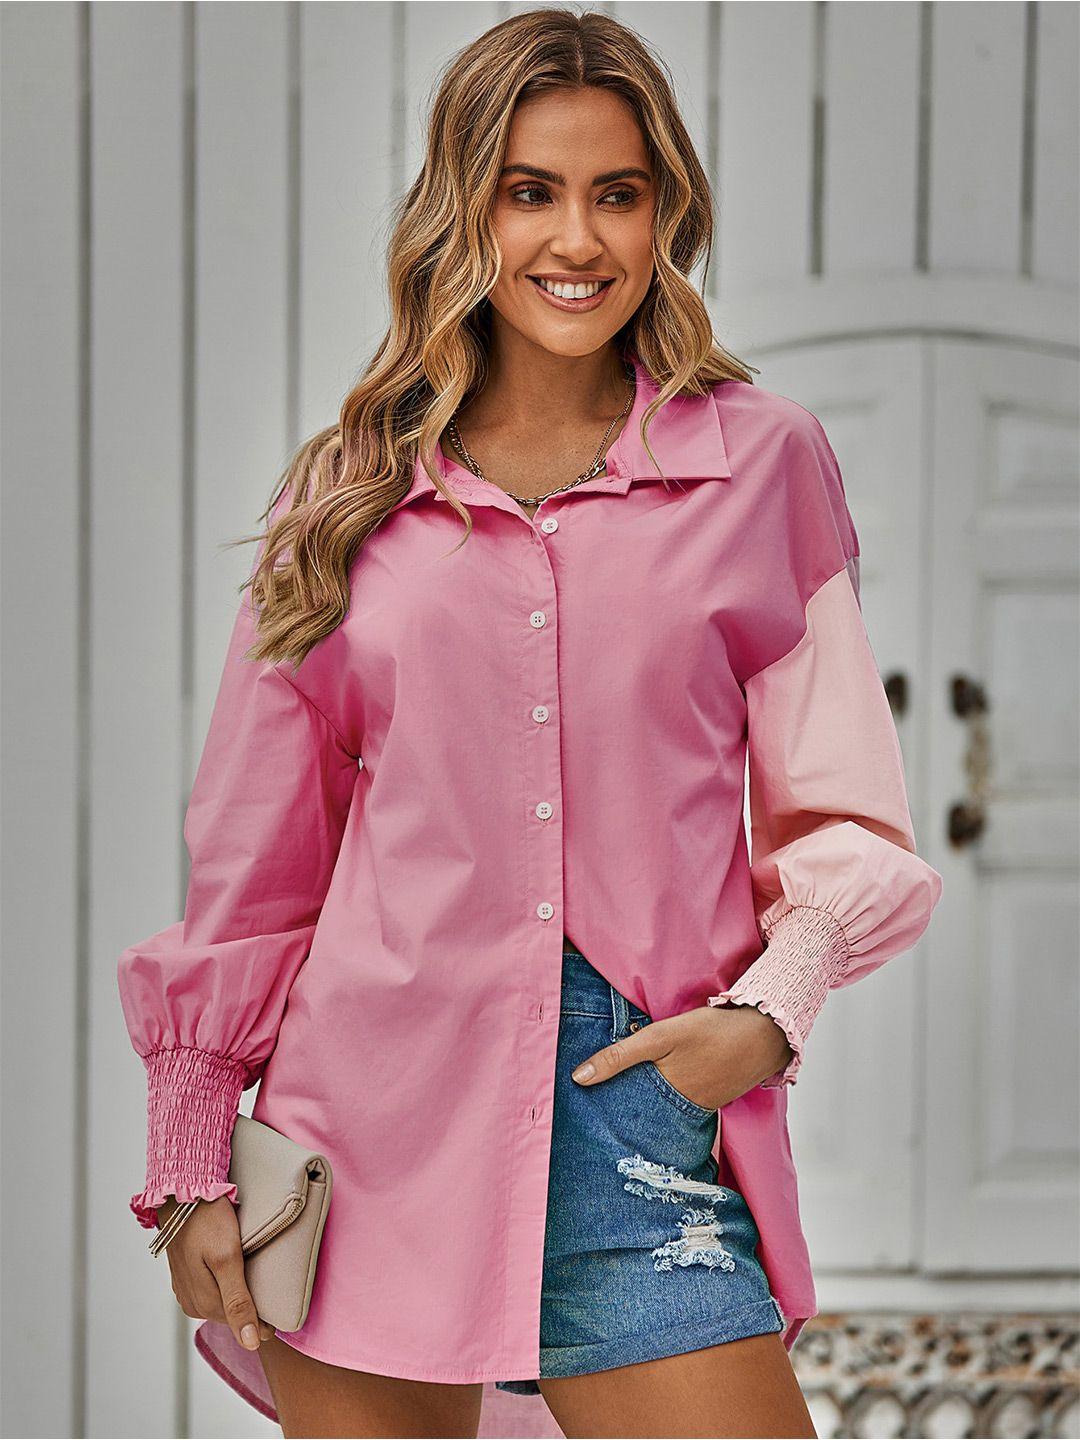 stylecast pink colourblocked shirt style longline top